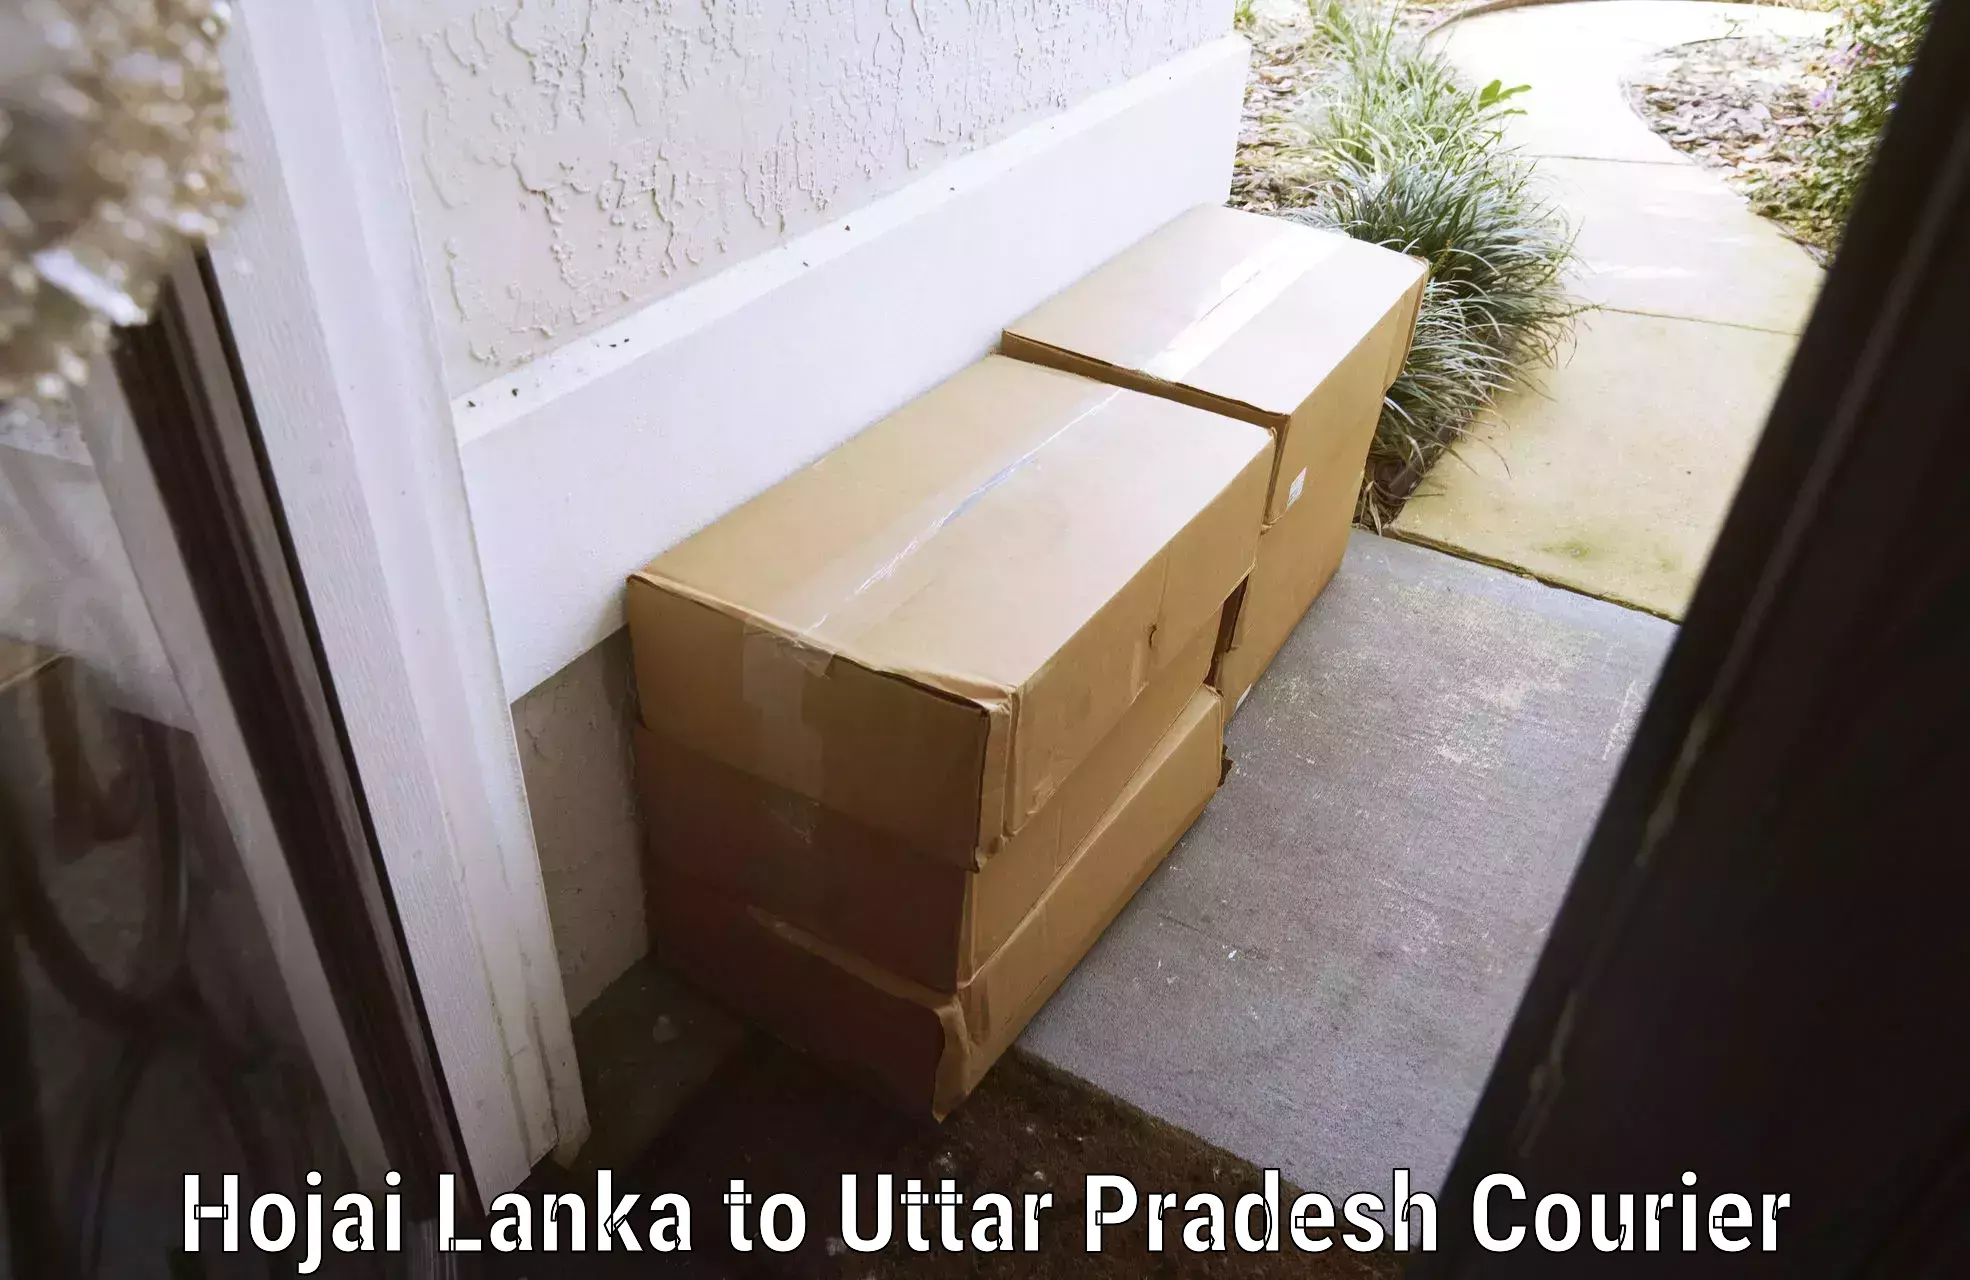 High-quality baggage shipment in Hojai Lanka to Muzaffarnagar